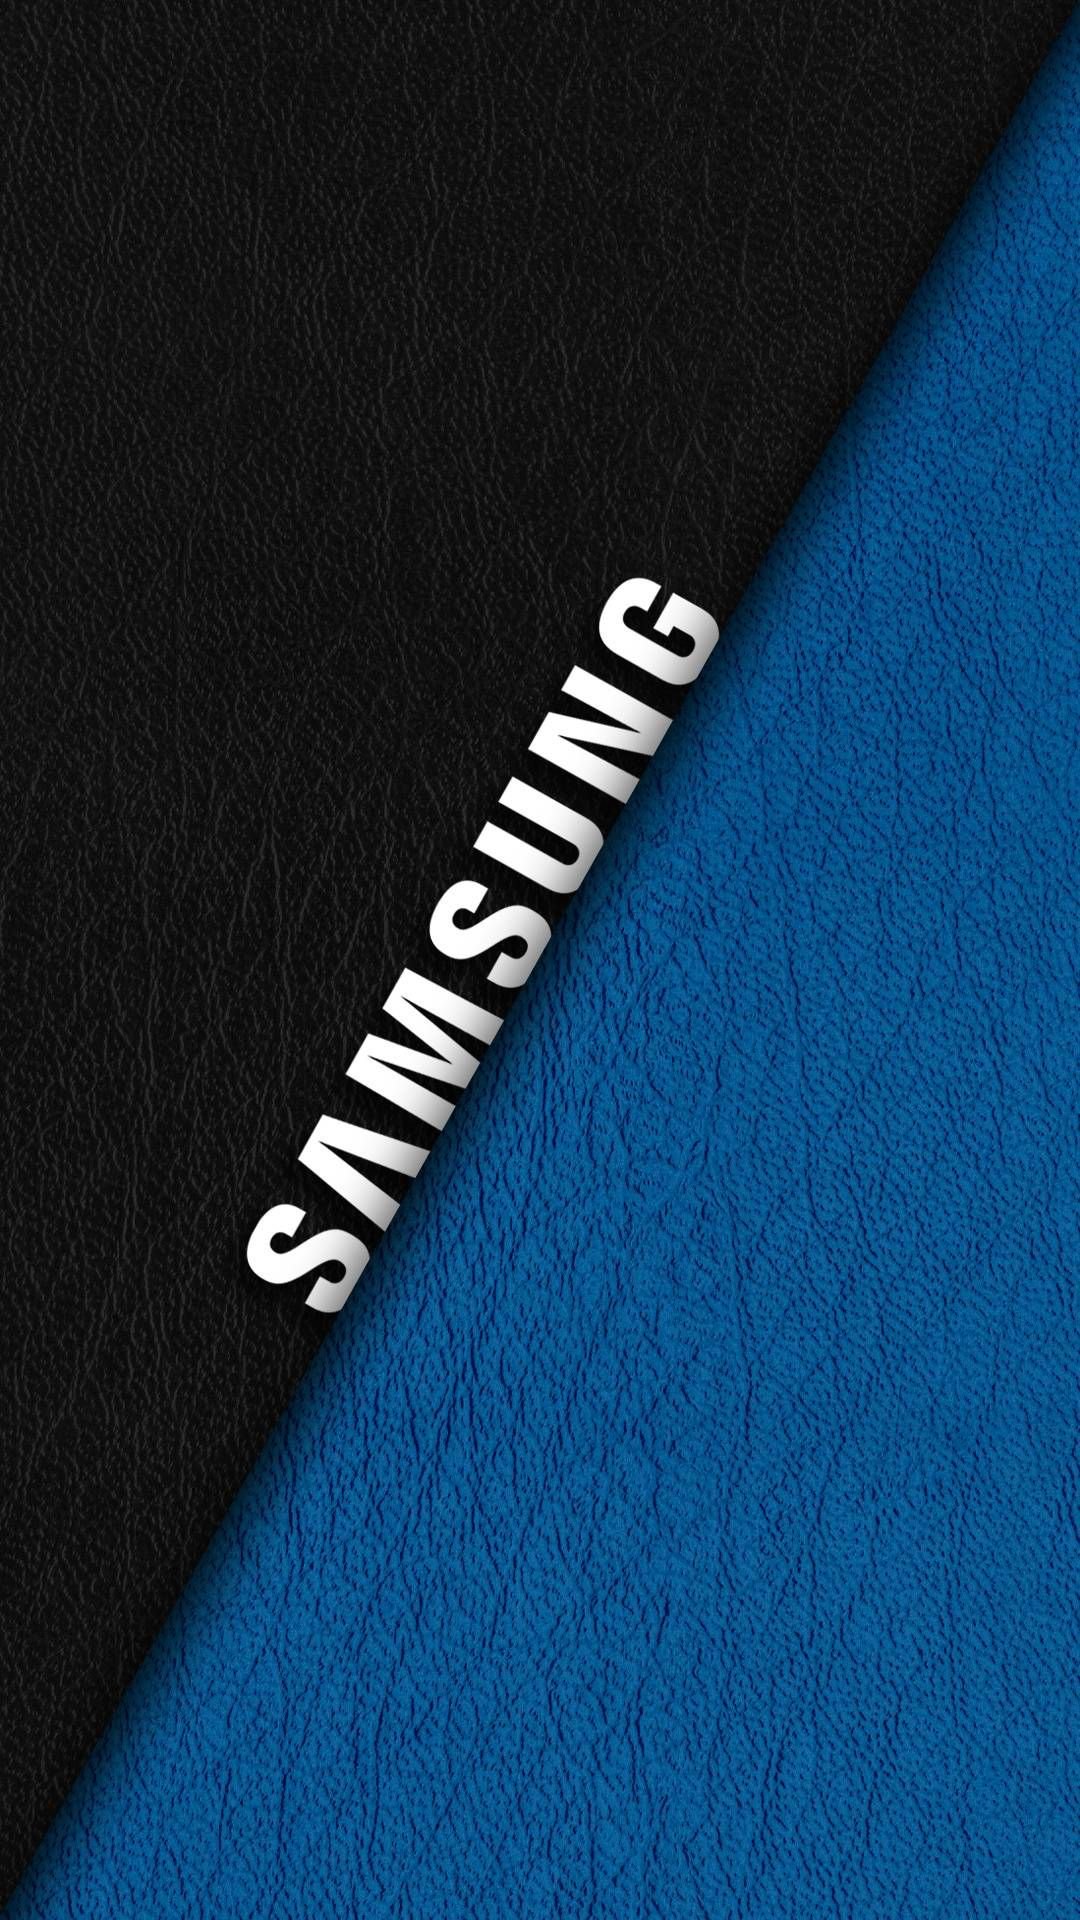 Картинки самсунг. Надпись самсунг. Логотип самсунг гелакси. Обои с логотипом Samsung. Надпись самсунг на тёмном фоне.